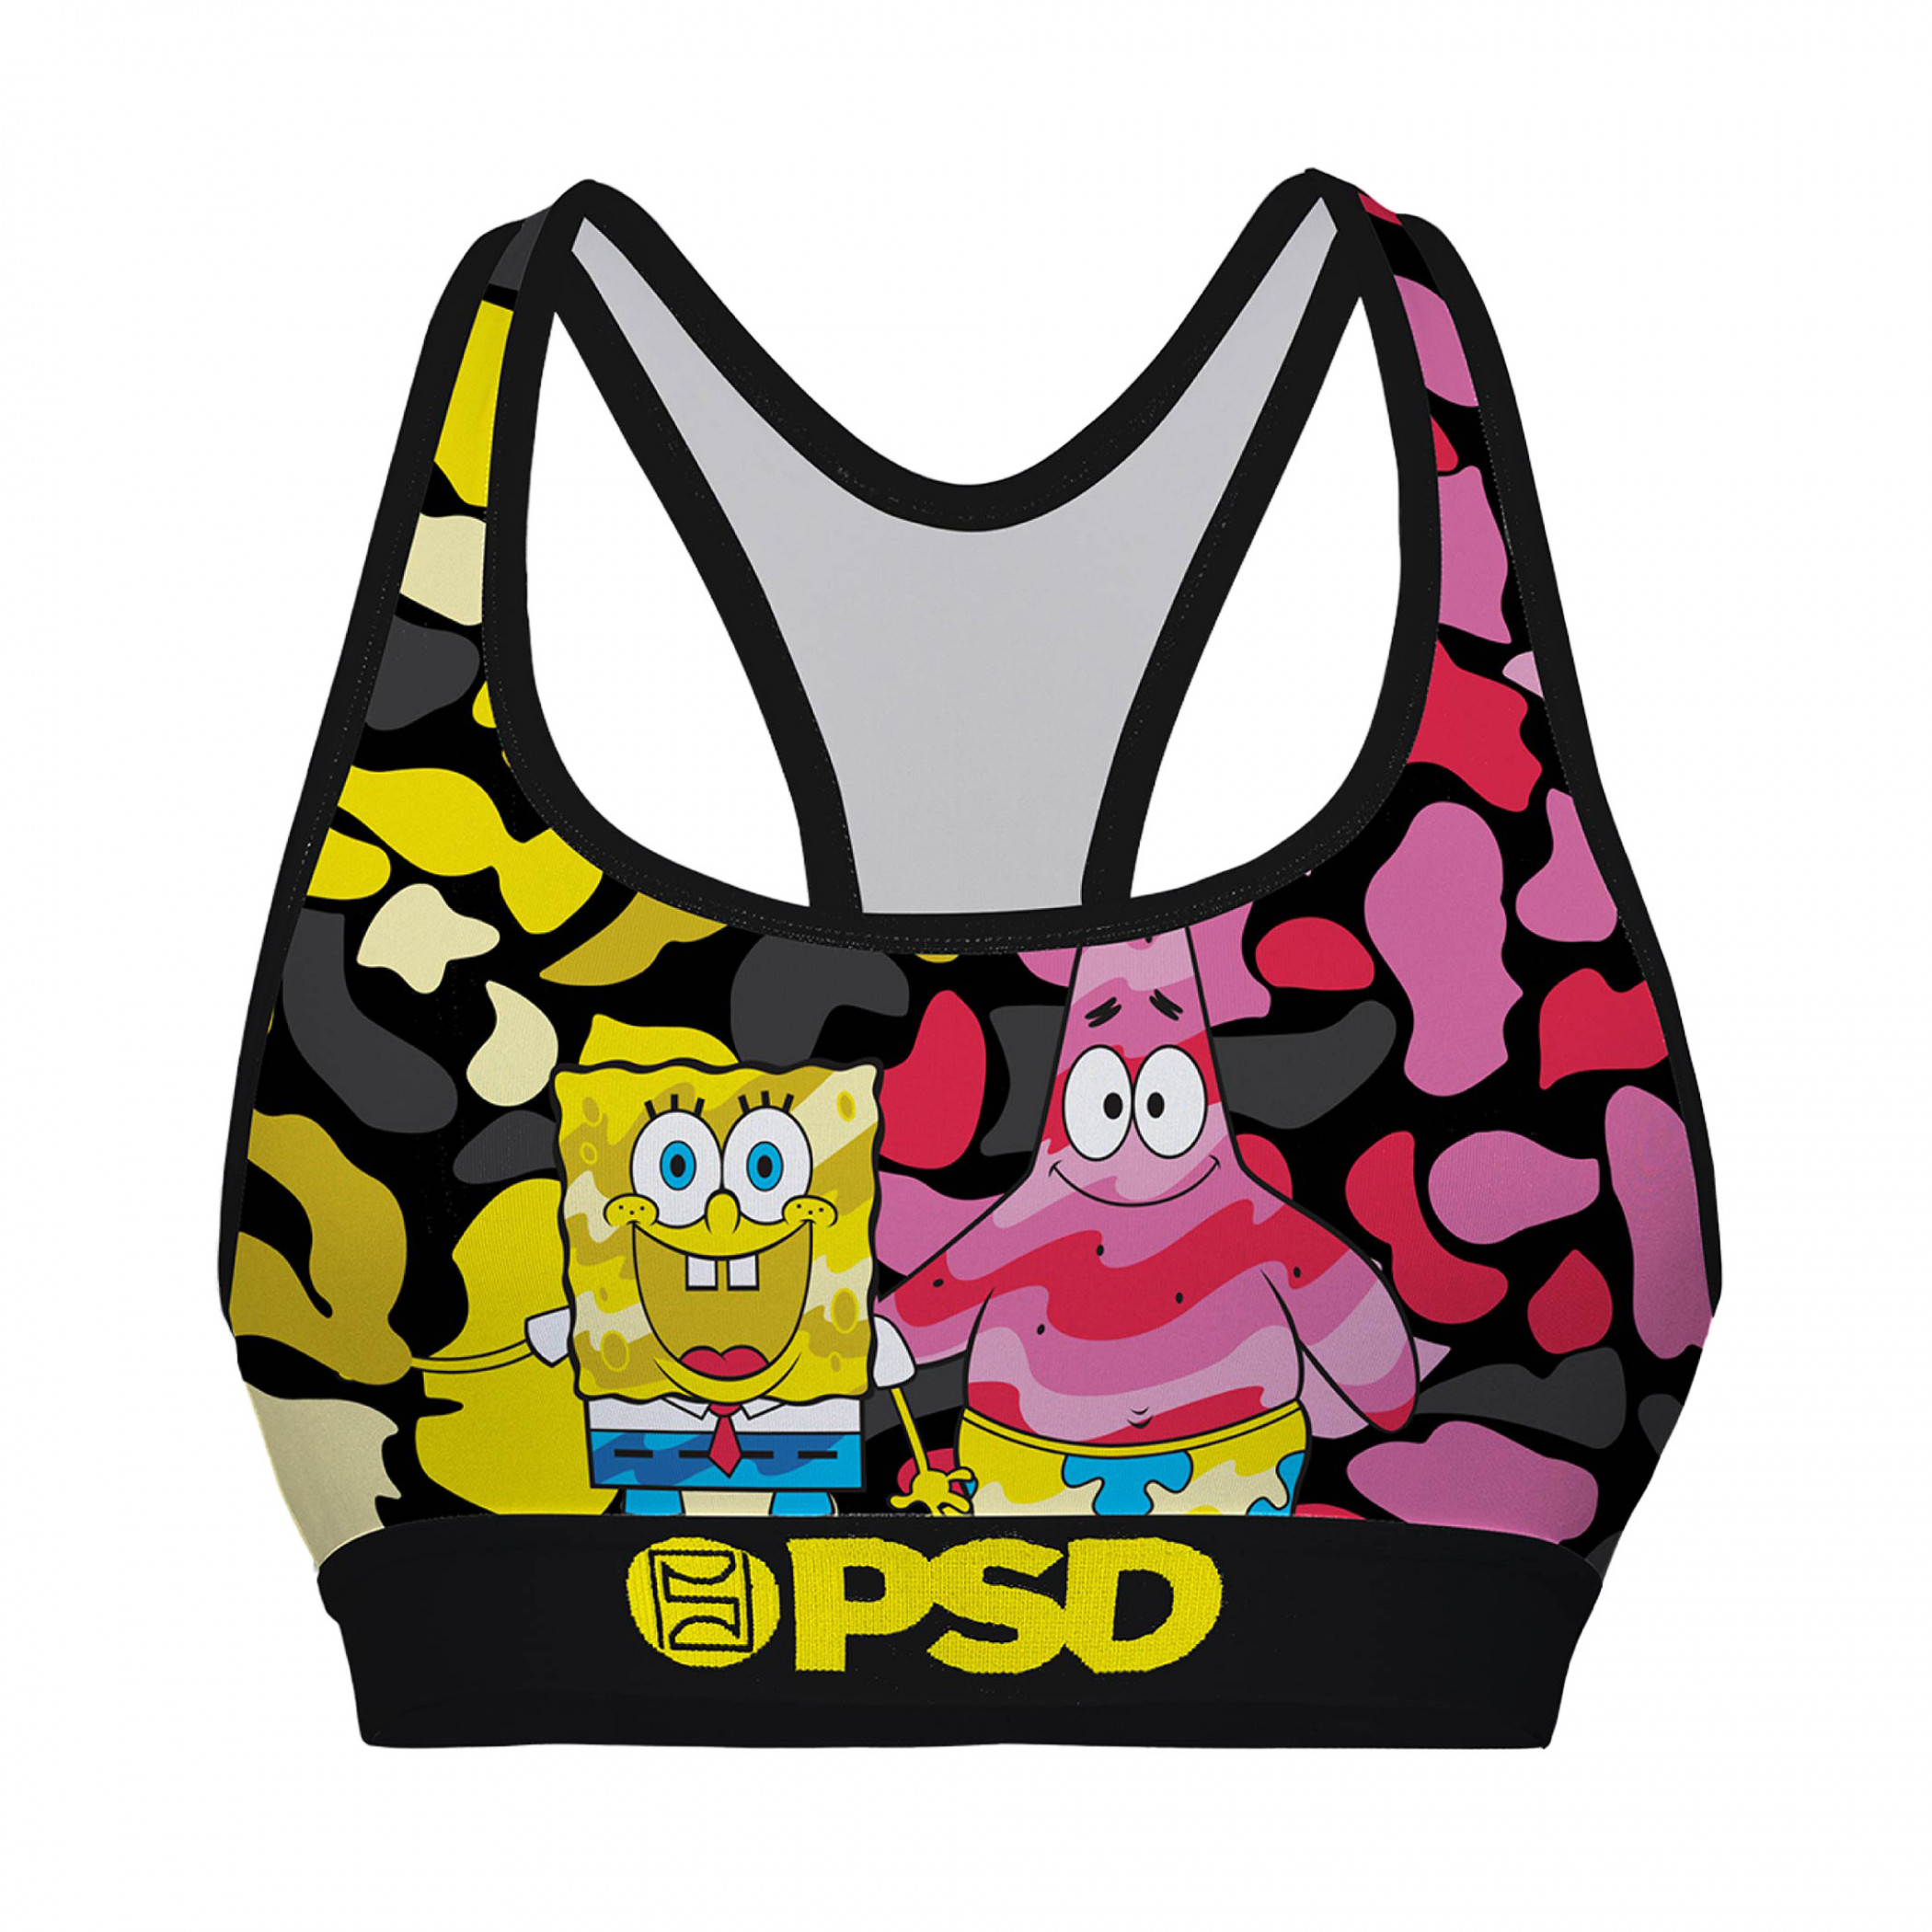 Buy SpongeBob SquarePants with Patrick Camo Print PSD Sports Bra